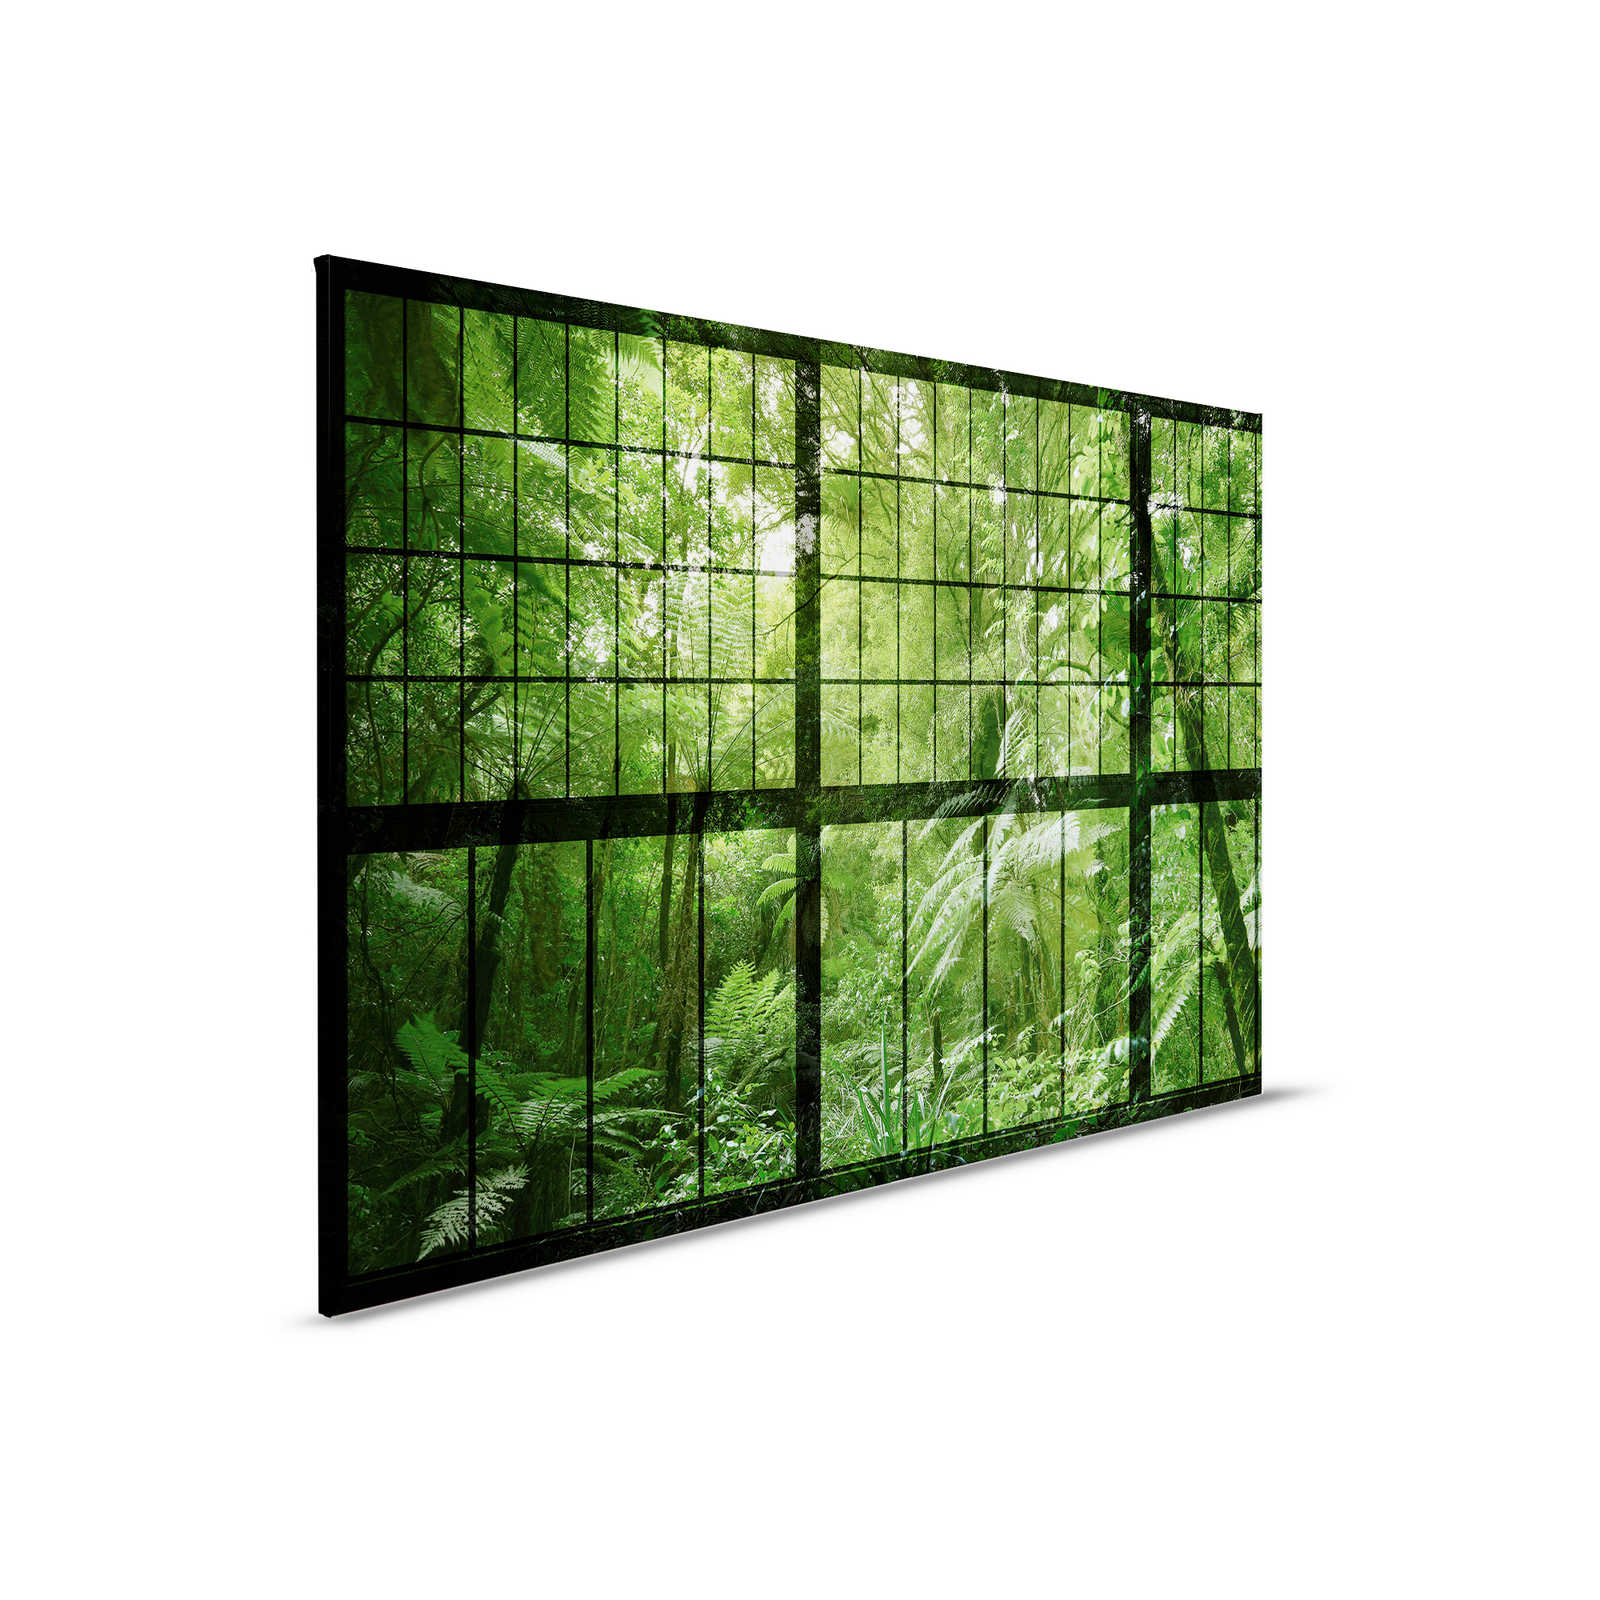         Rainforest 2 - Loftfenster Leinwandbild mit Dschungel Aussicht – 0,90 m x 0,60 m
    